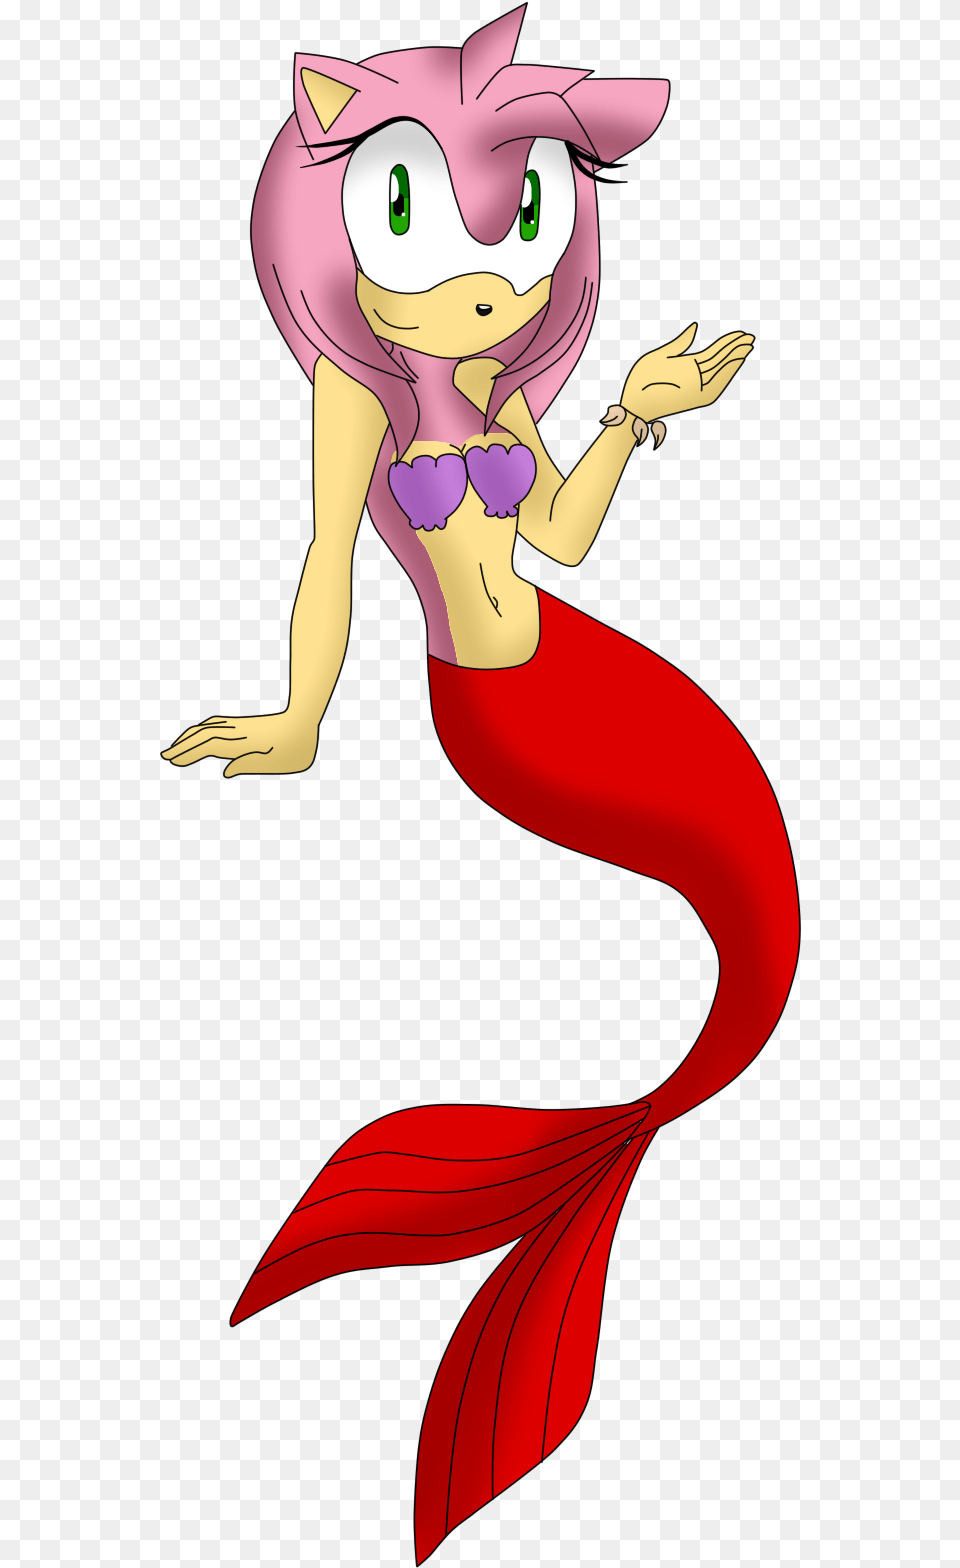 Pc Mermaid Amy Rose By Miss Aquatic Amy Rose As A Mermaid, Book, Comics, Publication, Cartoon Png Image